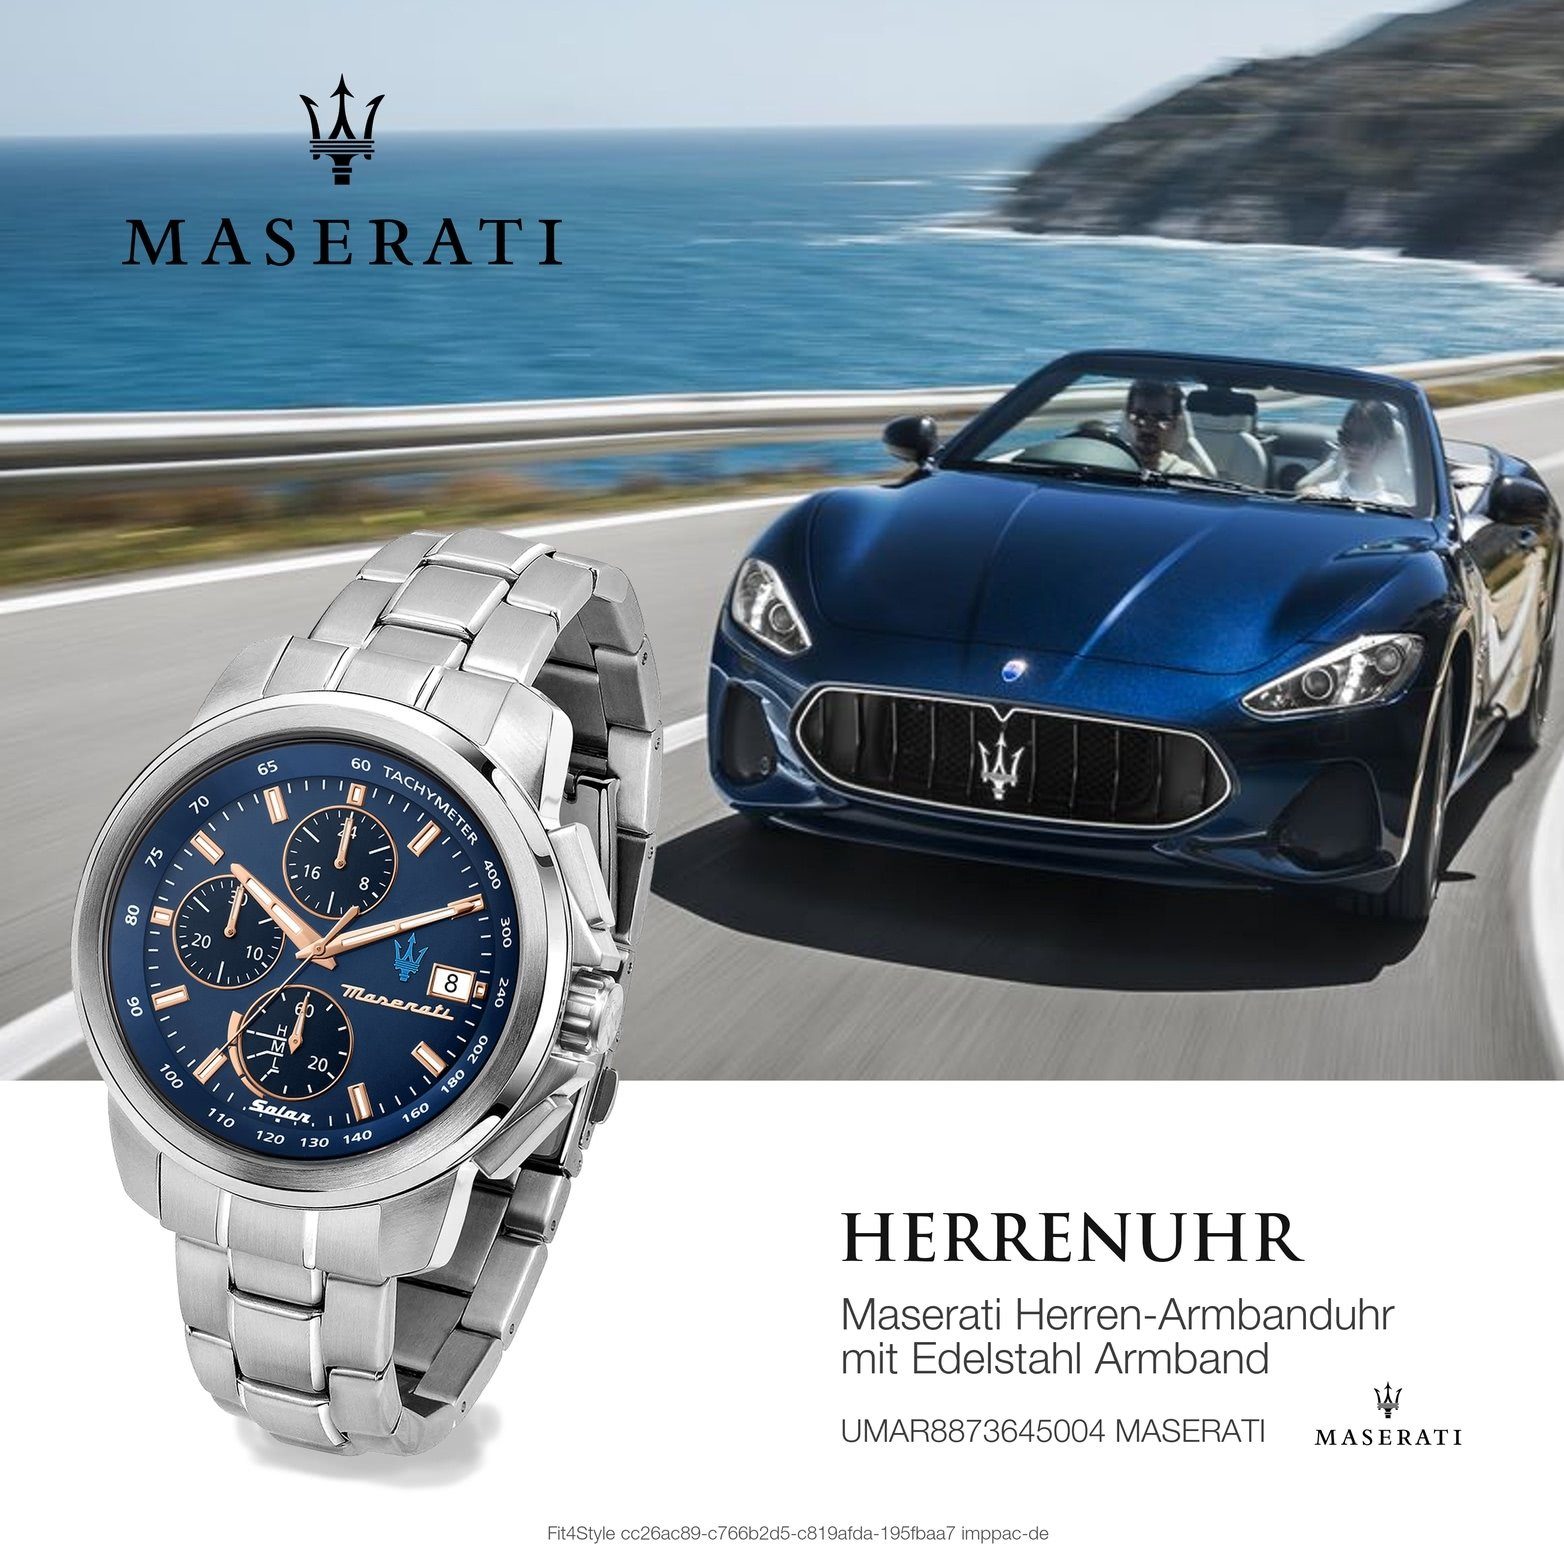 MASERATI Chronograph Maserati Edelstahl Chronograph, (ca. 44mm) rundes blau Herrenuhr Edelstahlarmband, Gehäuse, groß